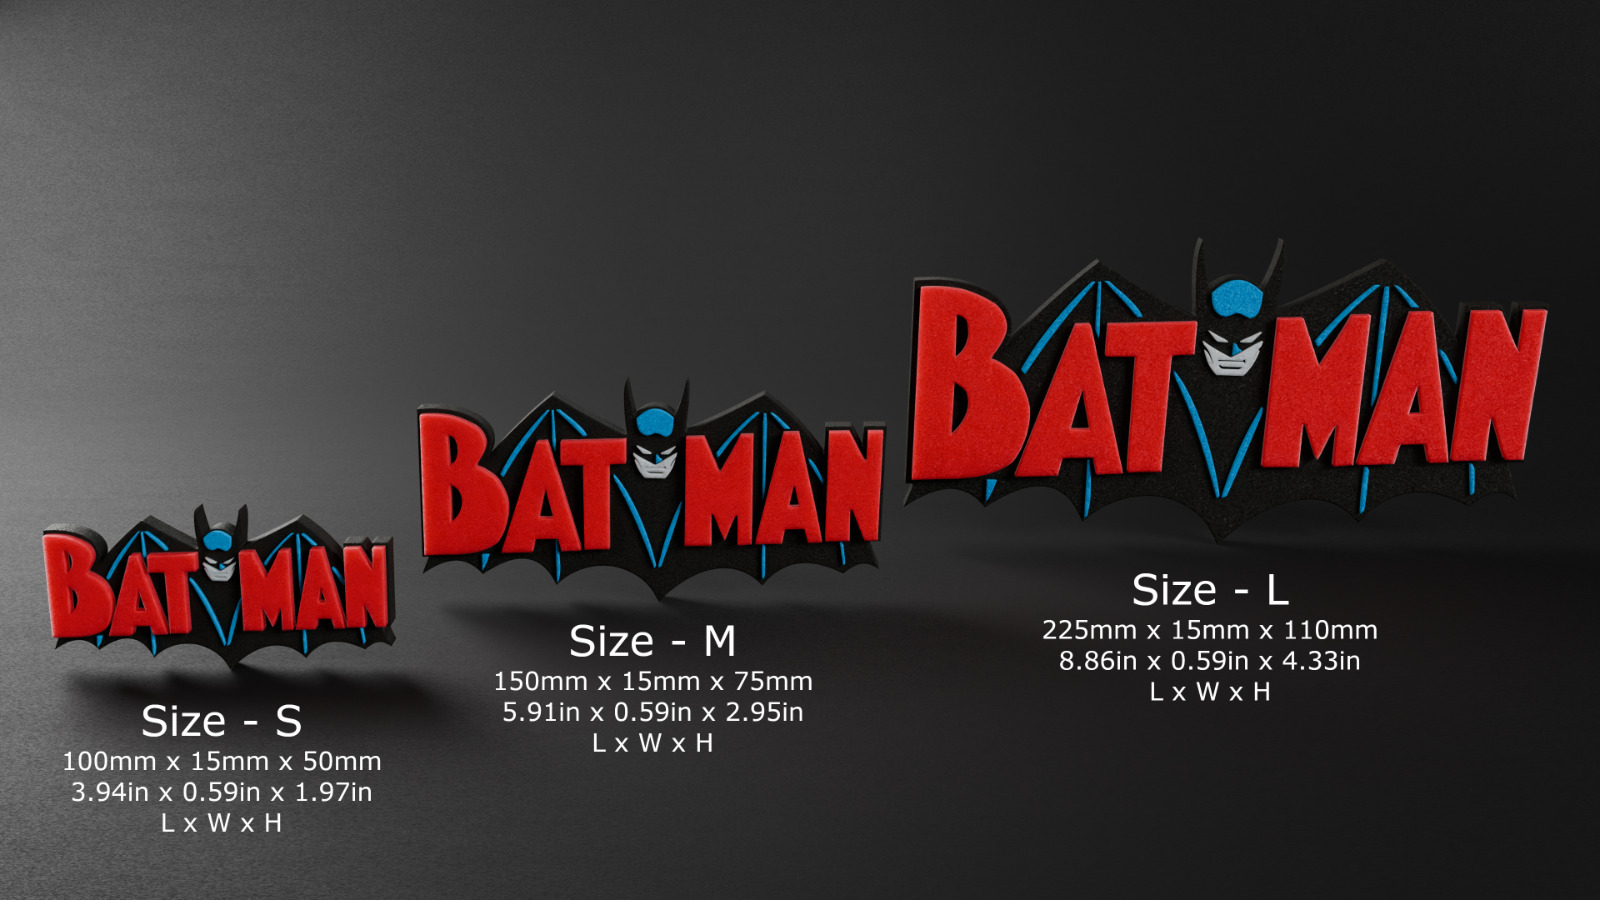 Batman 1940 - Movie/Comics 3D Printed Logo Display Sign (Unofficial Product)